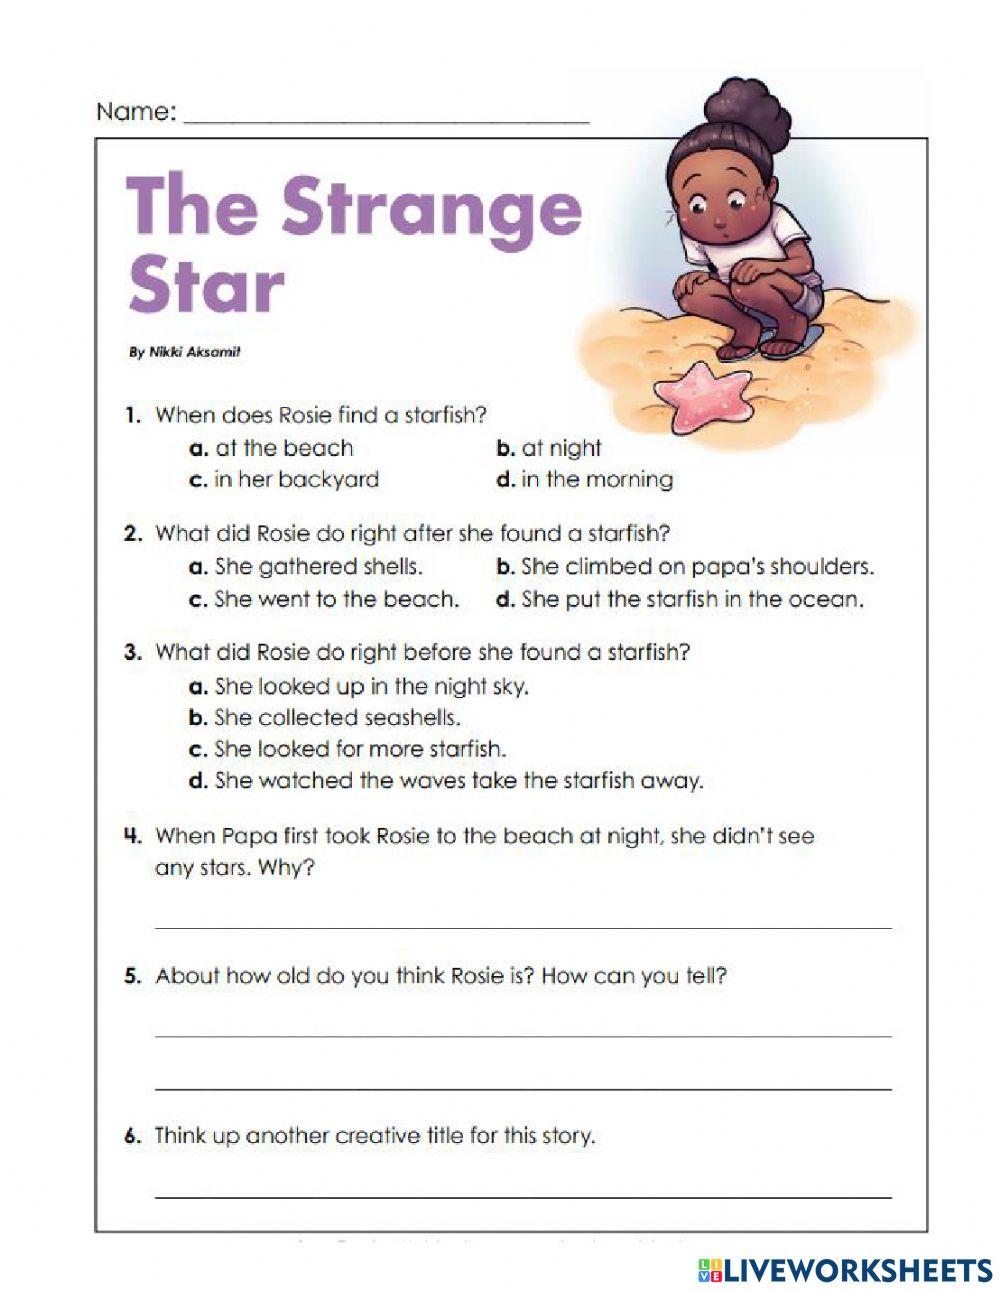 The Strange Star